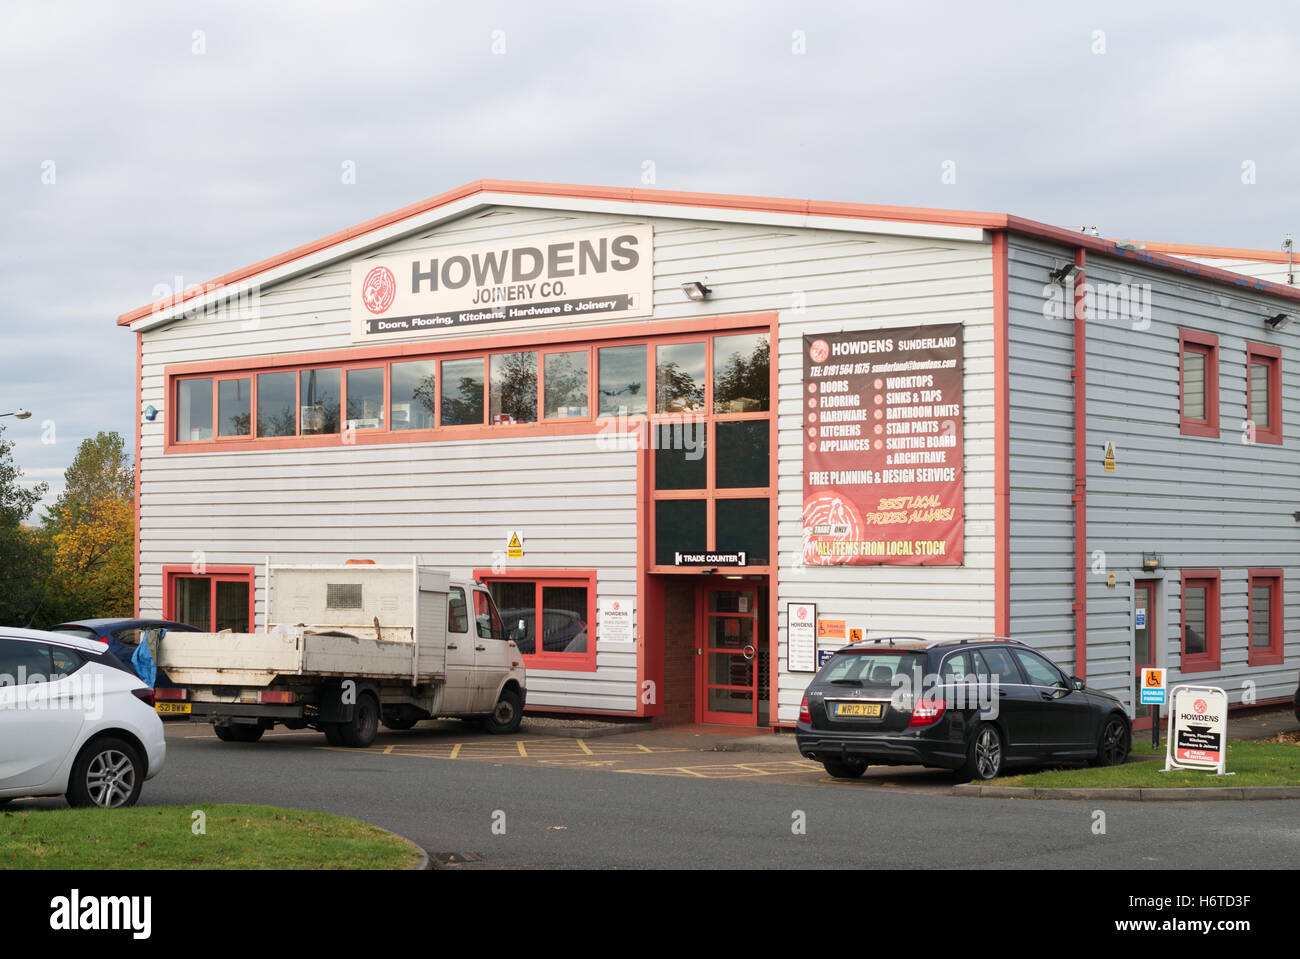 Howdens joinery Co., Sunderland, Tyne and Wear, England, UK Stock Photo